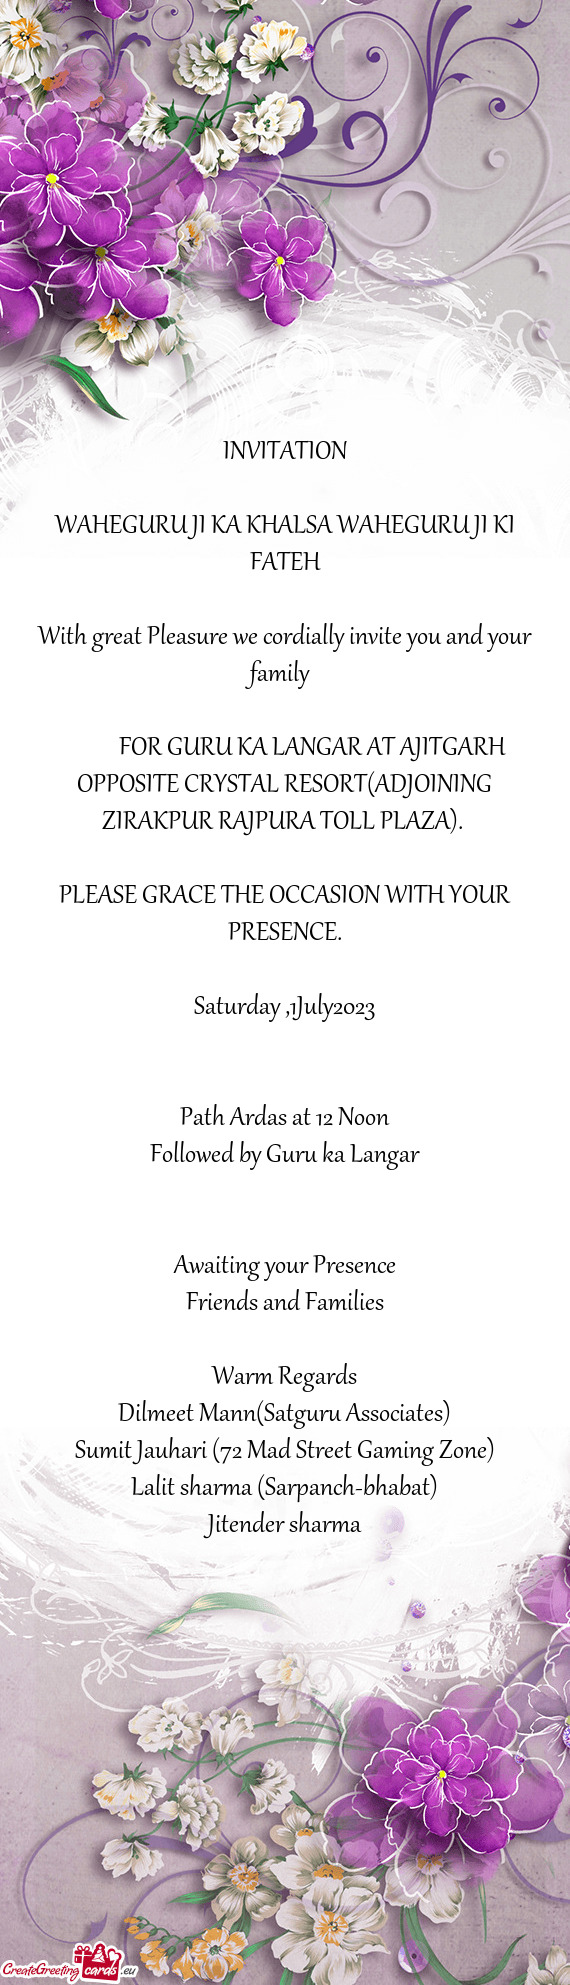 FOR GURU KA LANGAR AT AJITGARH OPPOSITE CRYSTAL RESORT(ADJOINING ZIRAKPUR RAJPURA TOLL PL